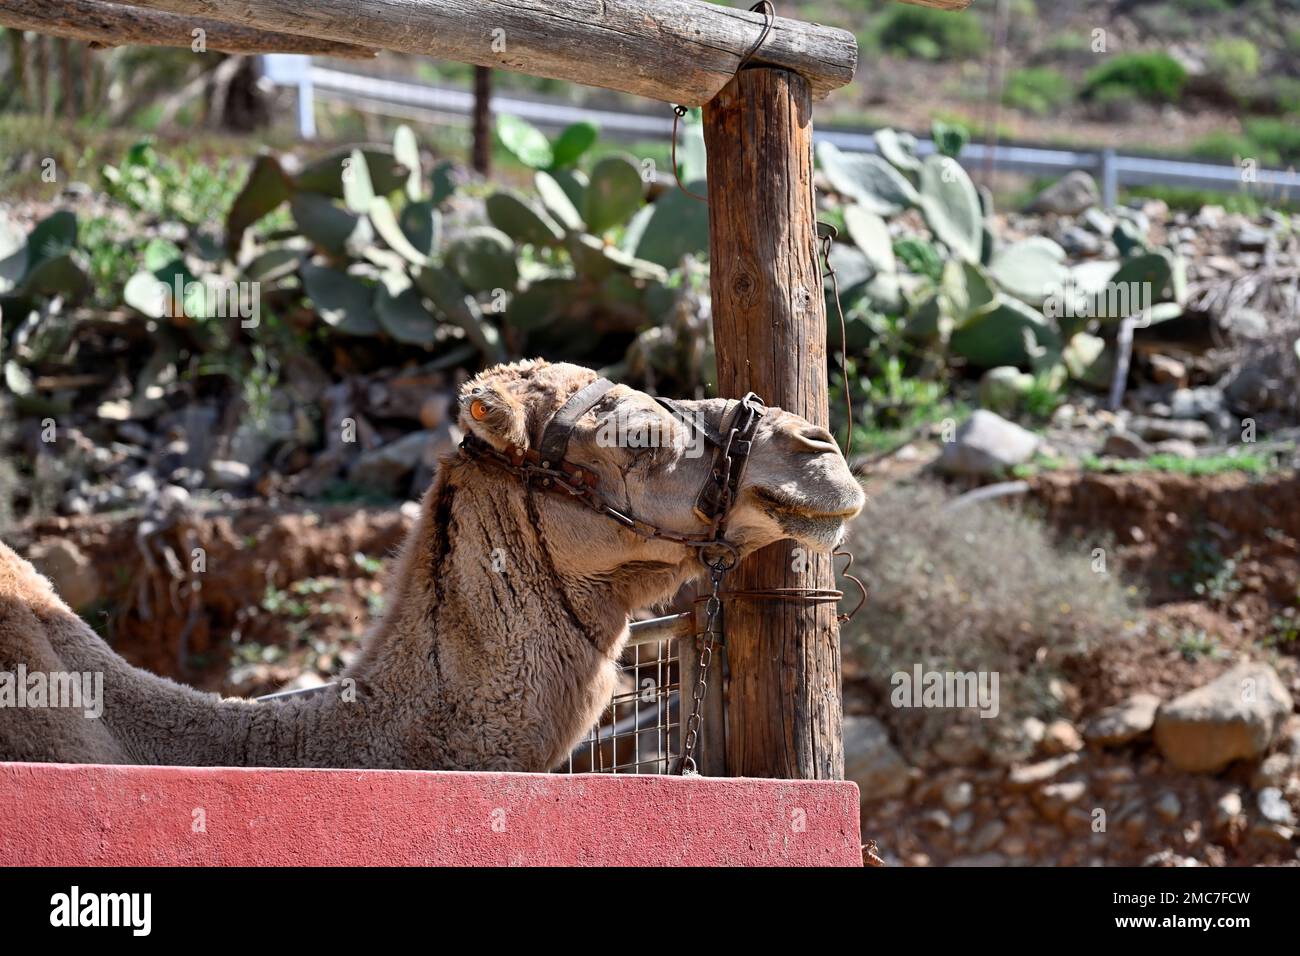 Camel in enclosure at Camel Safari Park “La Baranda” near Fataga, Gran Canaria Stock Photo